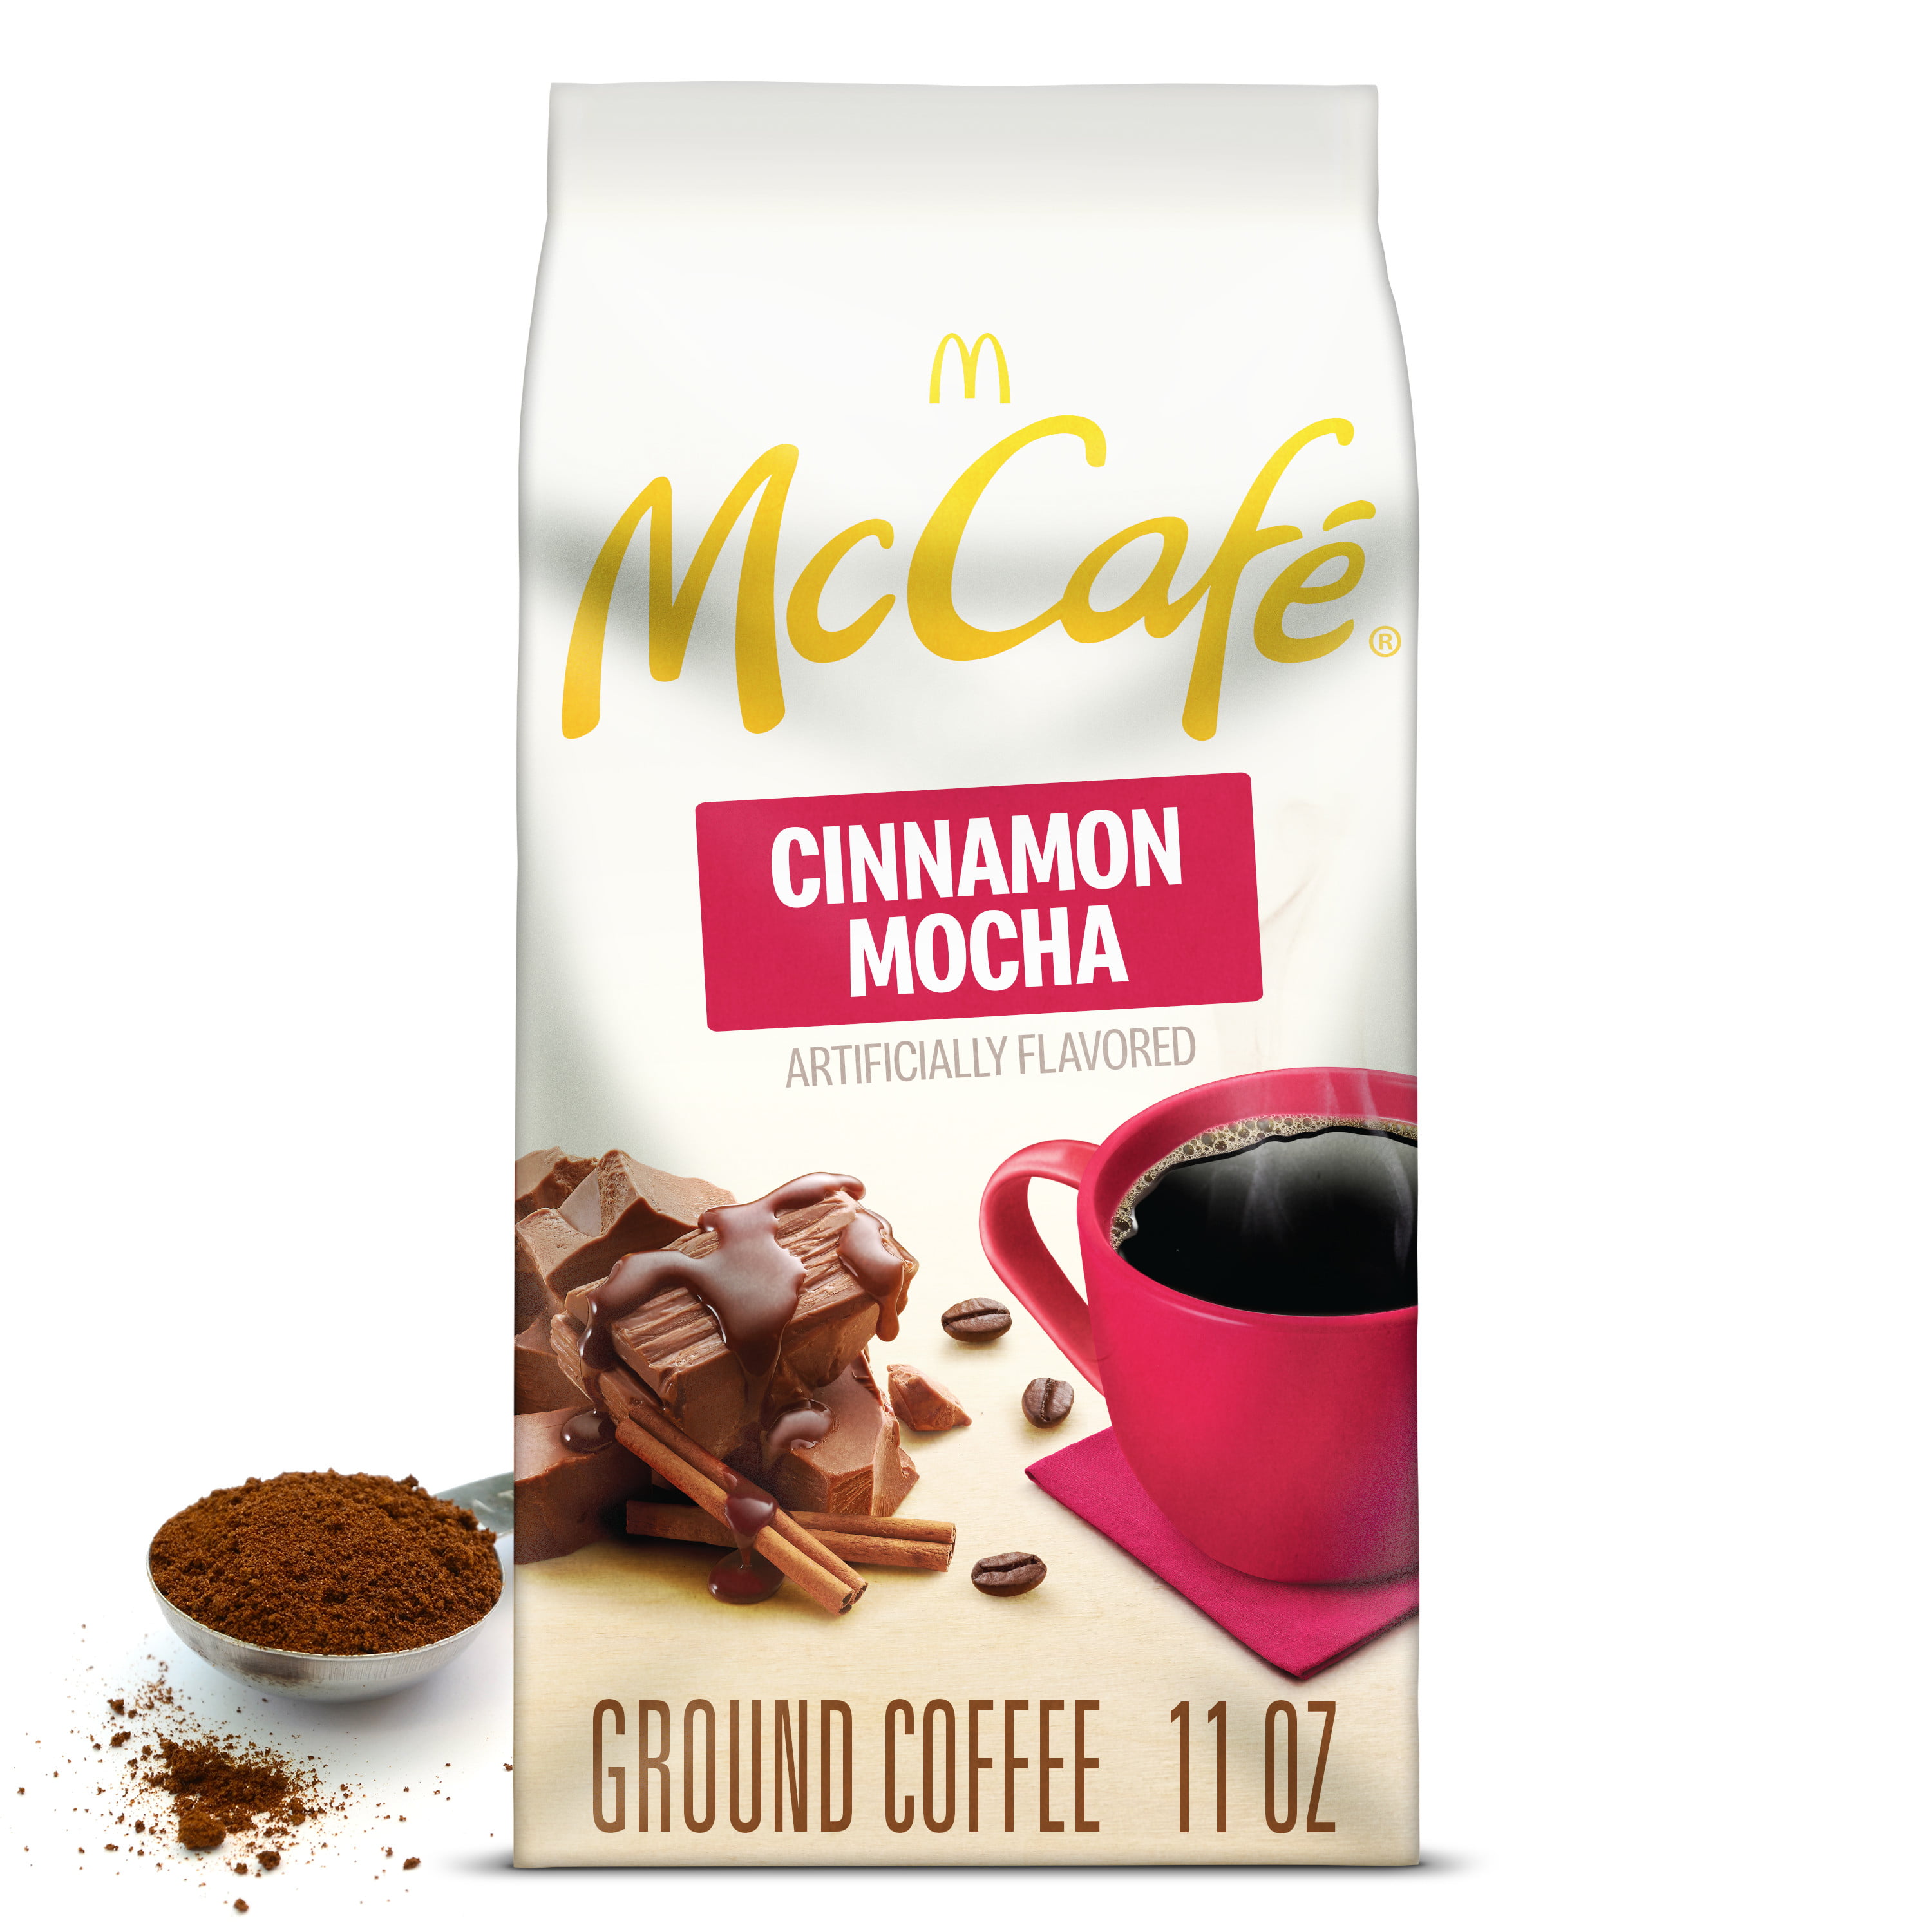 McCafe Mocha Collection Cinnamon Mocha Flavored Ground Coffee, Light ...